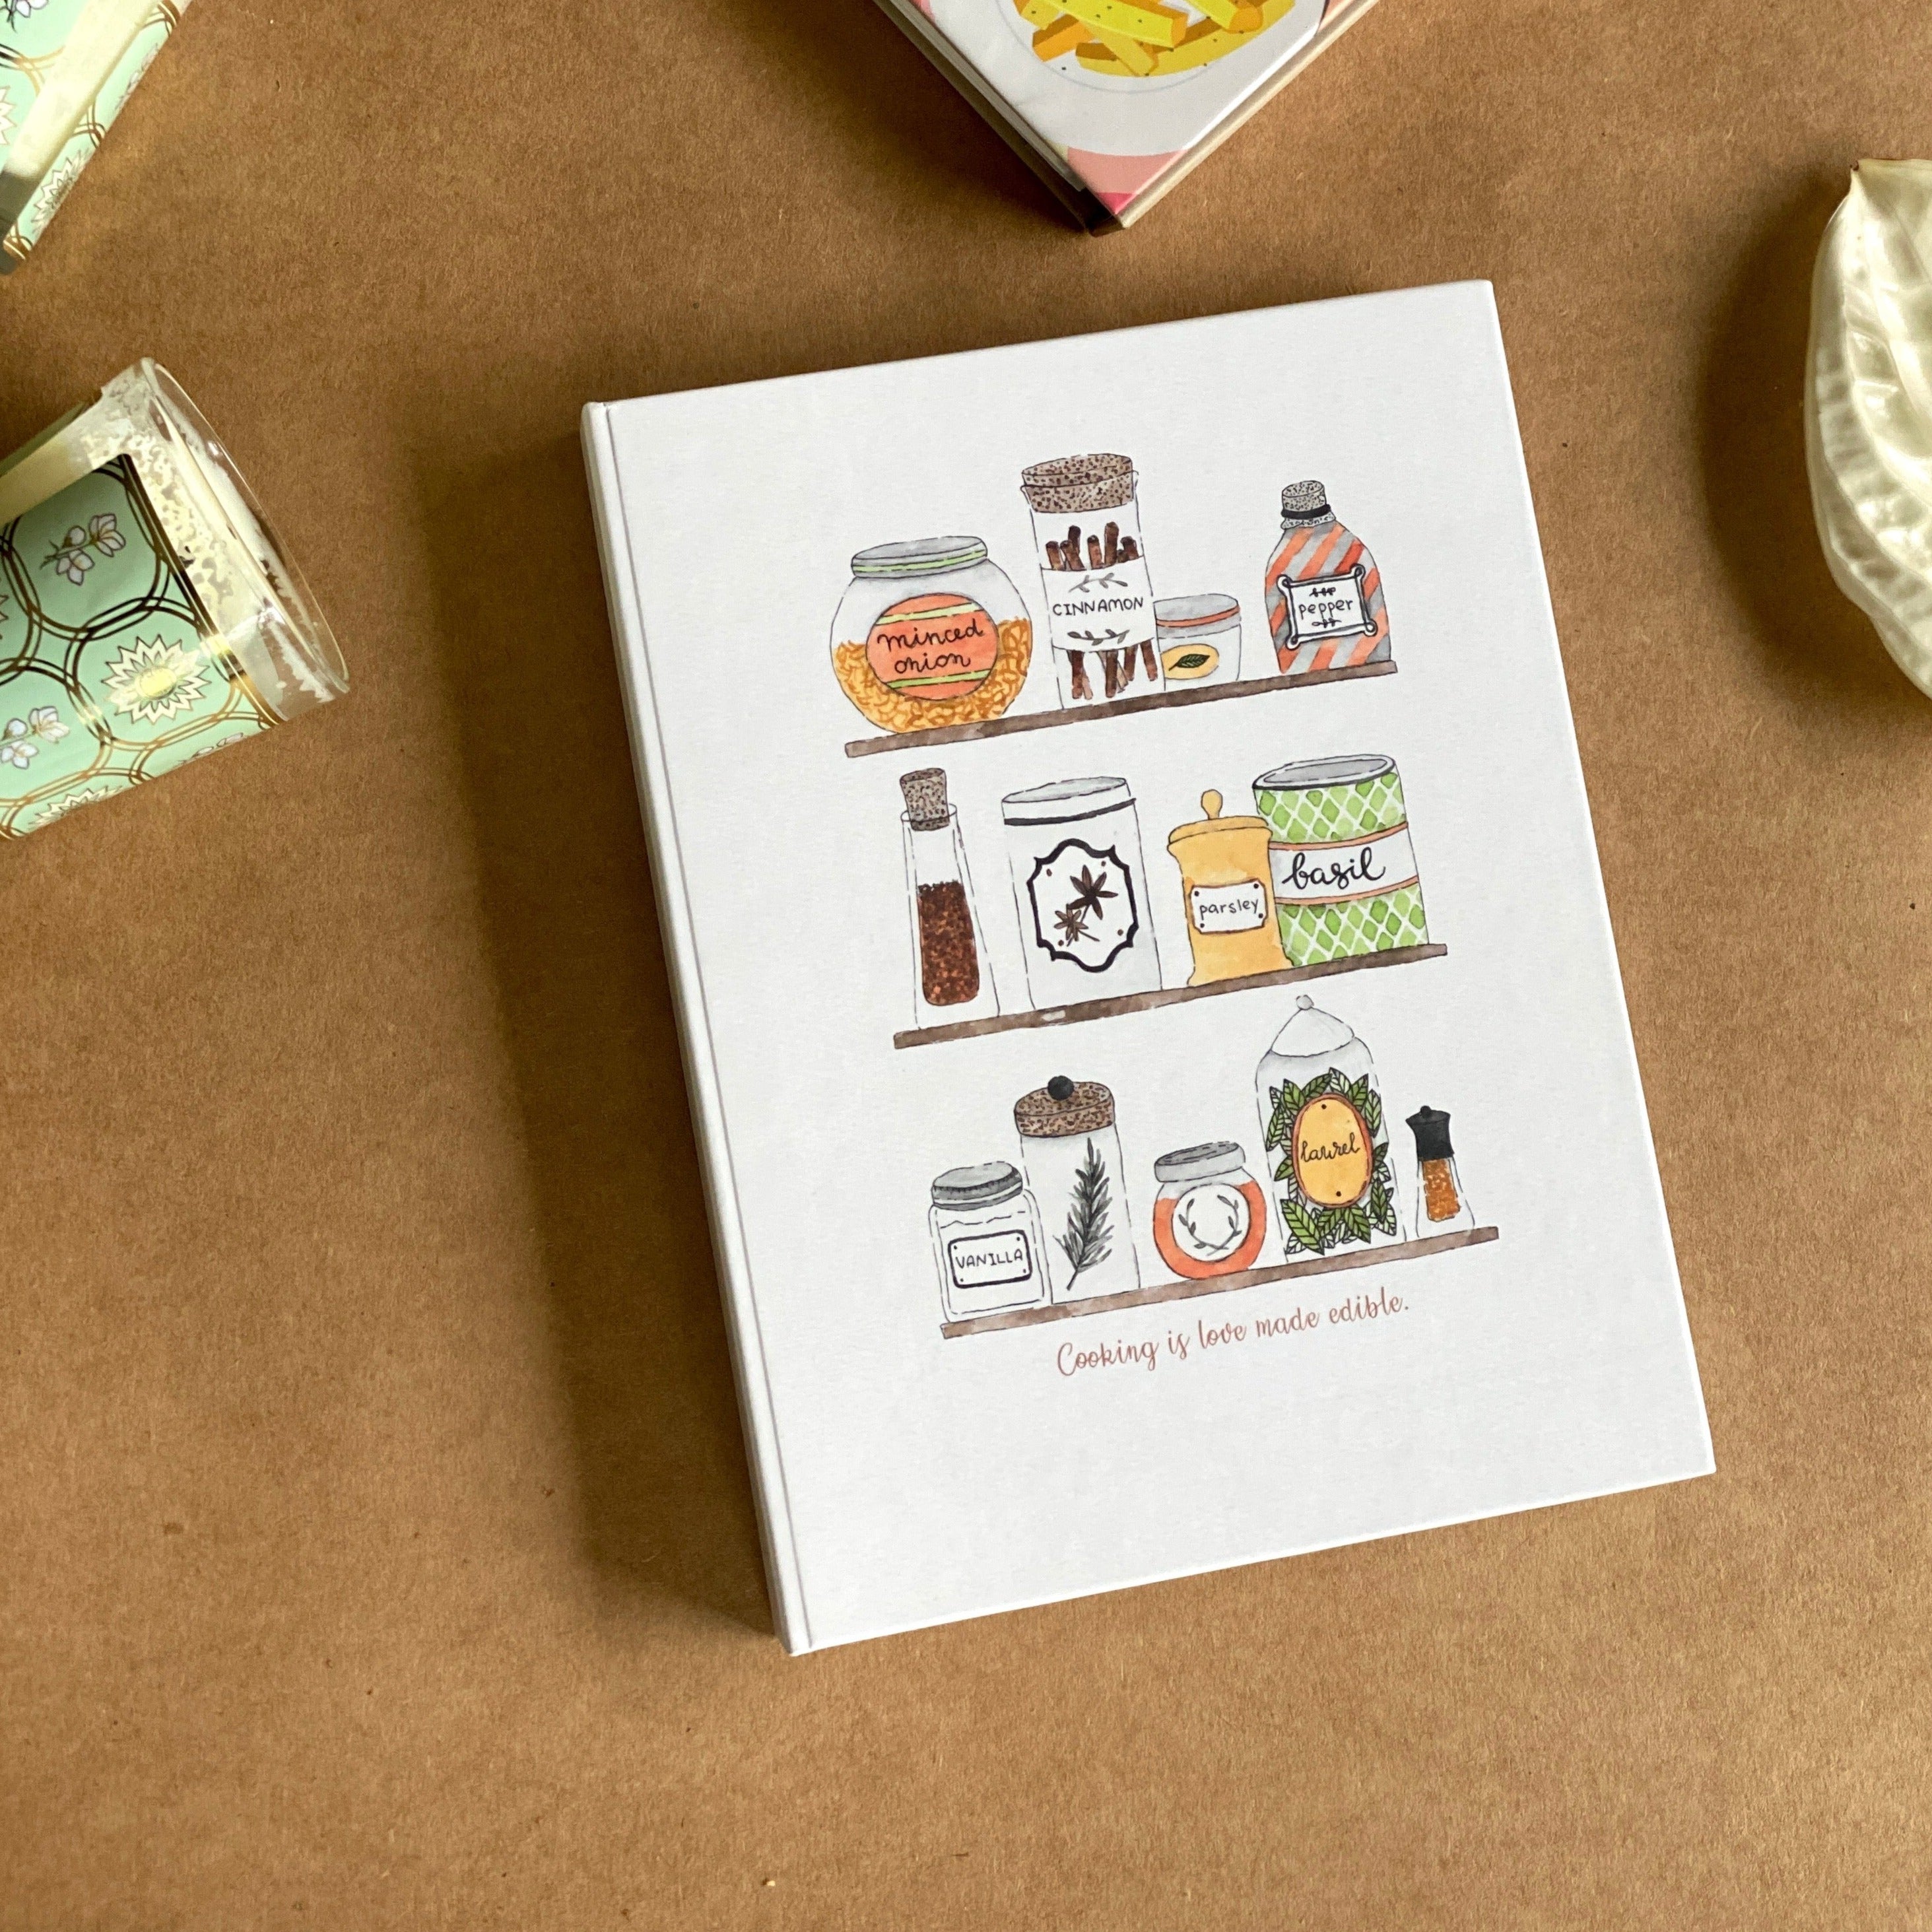 Granny's Kitchen cookbook - PAPER-IT